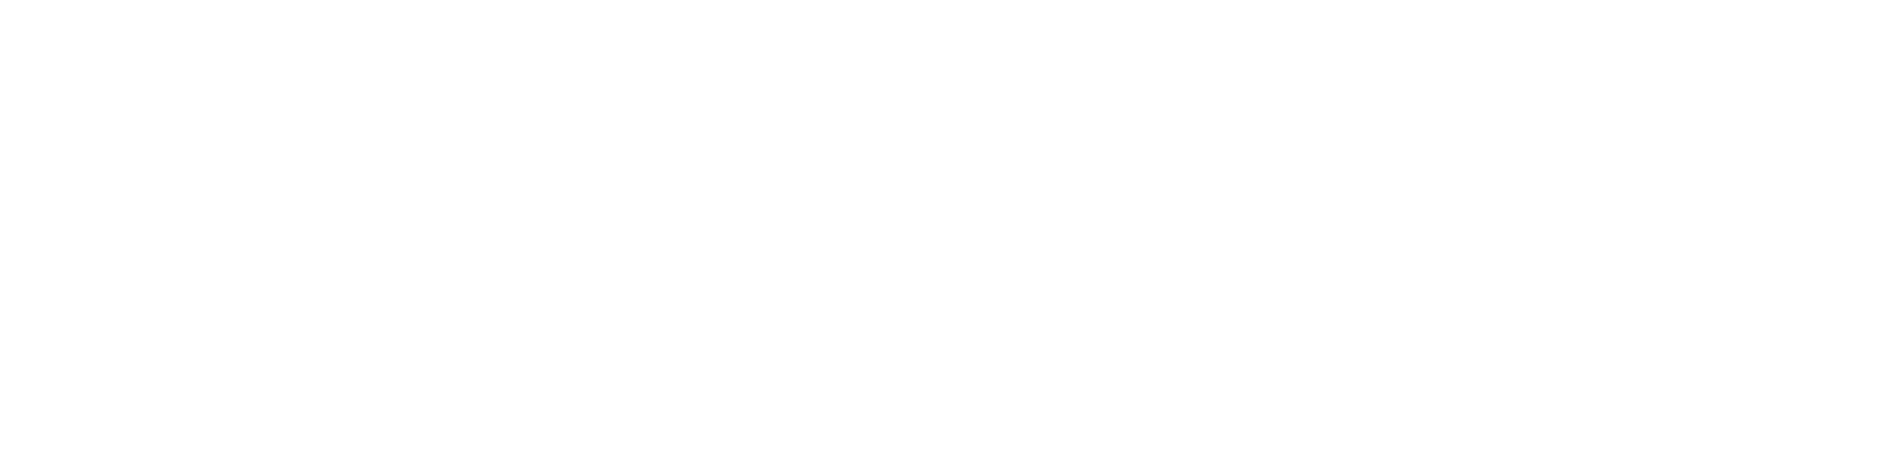 Silvergate Capital logo large for dark backgrounds (transparent PNG)